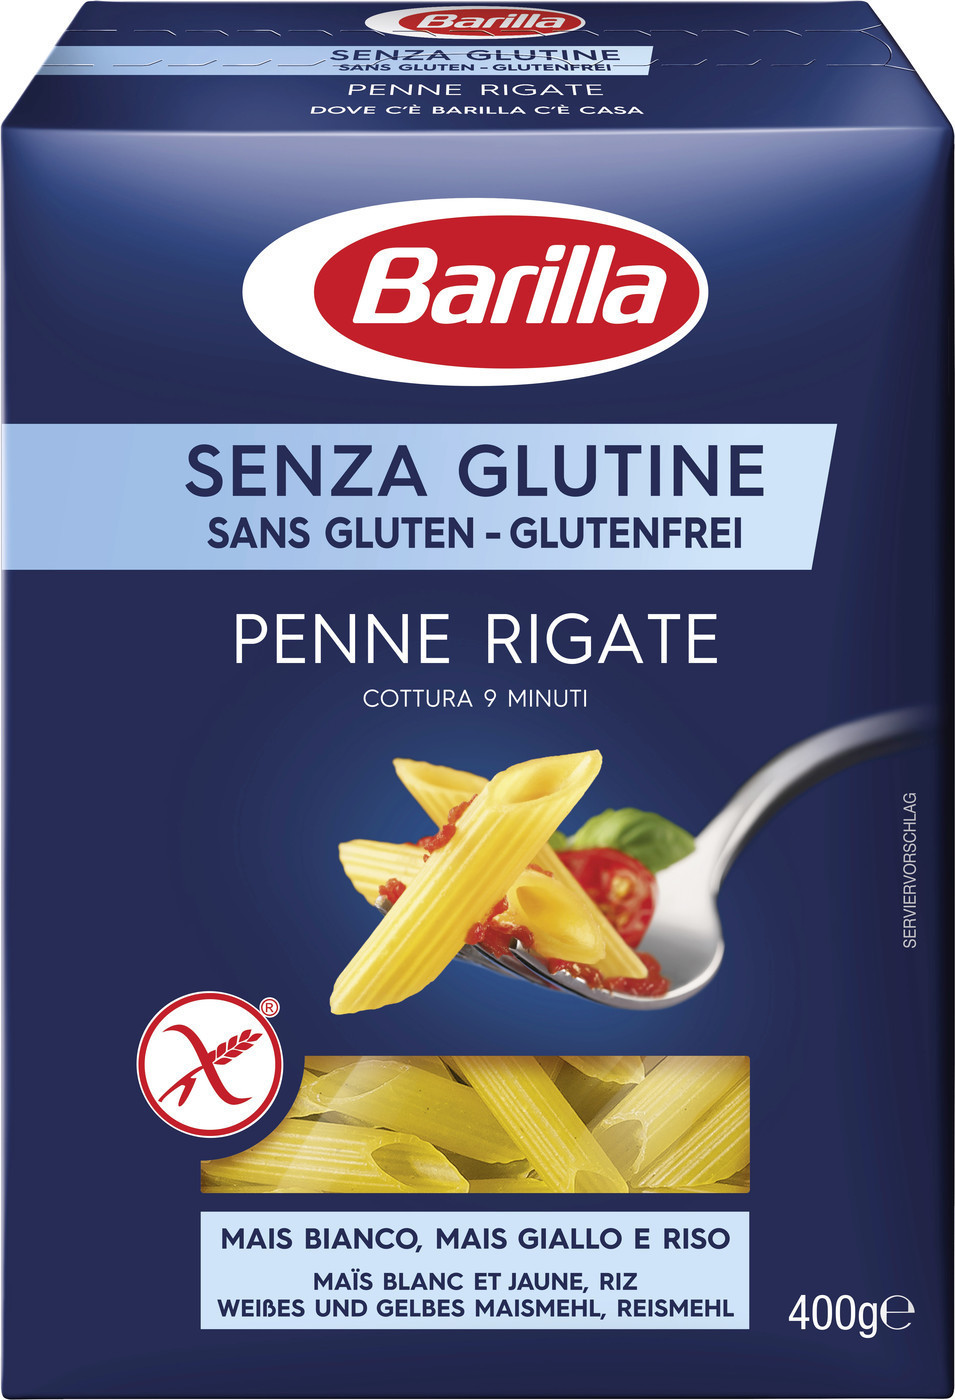 Barilla Penne Rigate Gluten Free (400g)